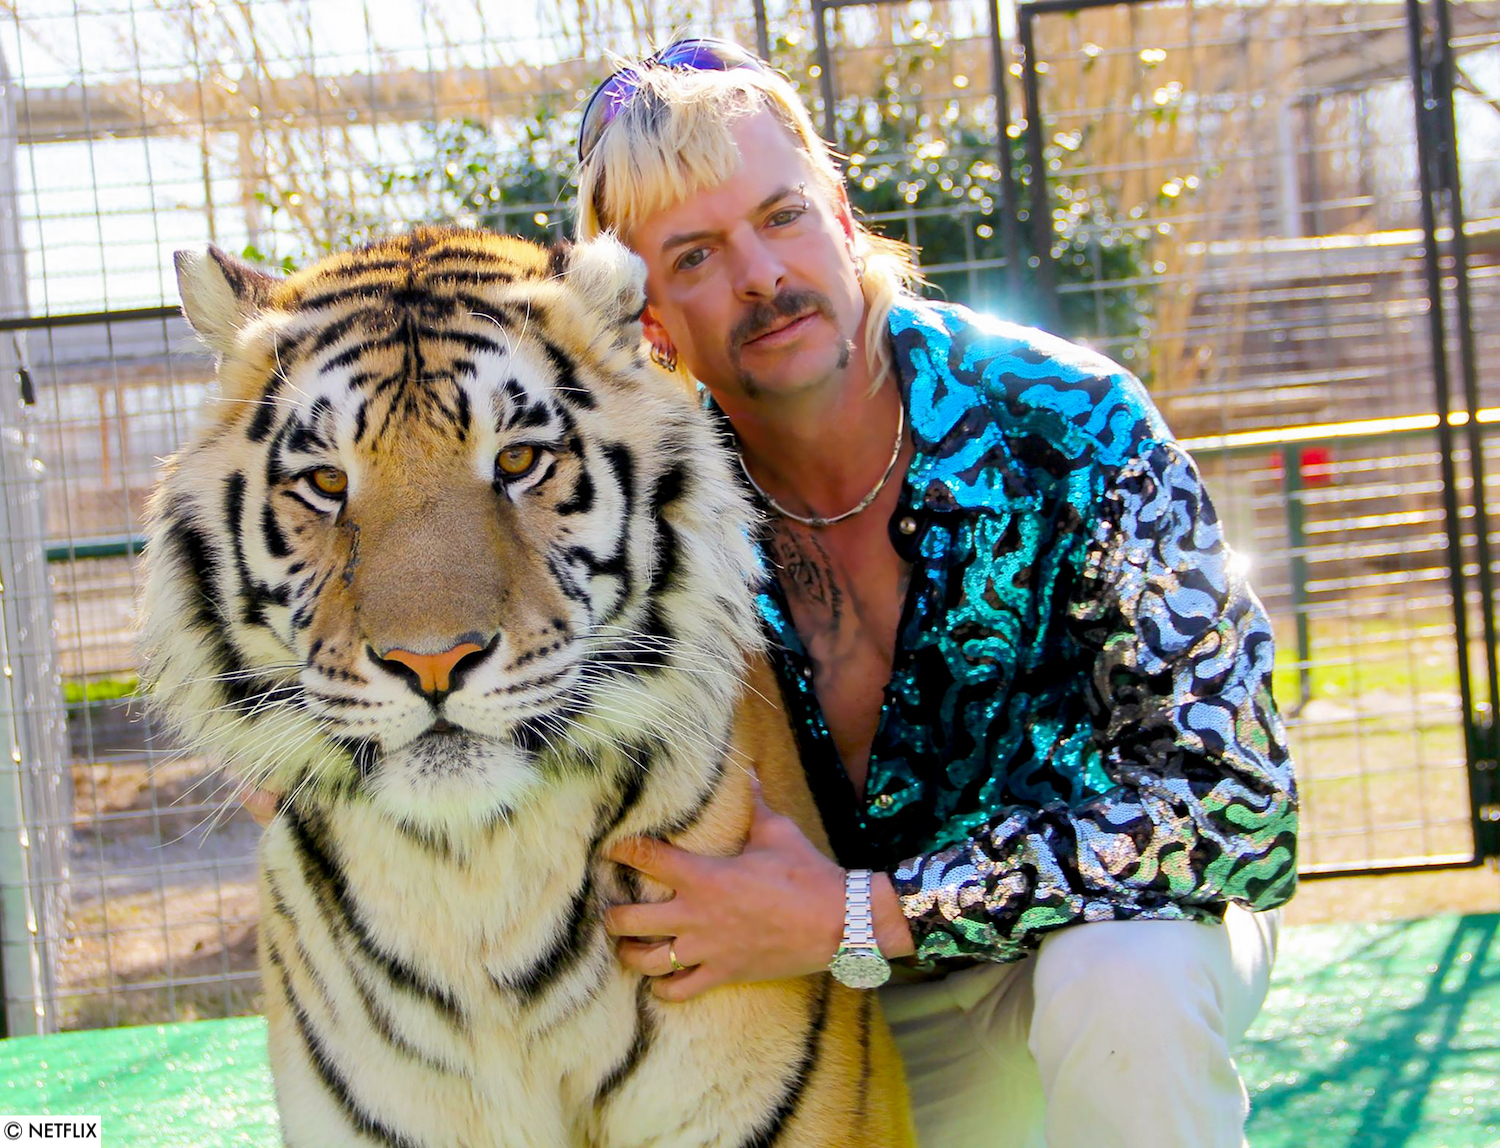 Tiger King’s Joe Exotic is quarantined over Coronavirus concerns